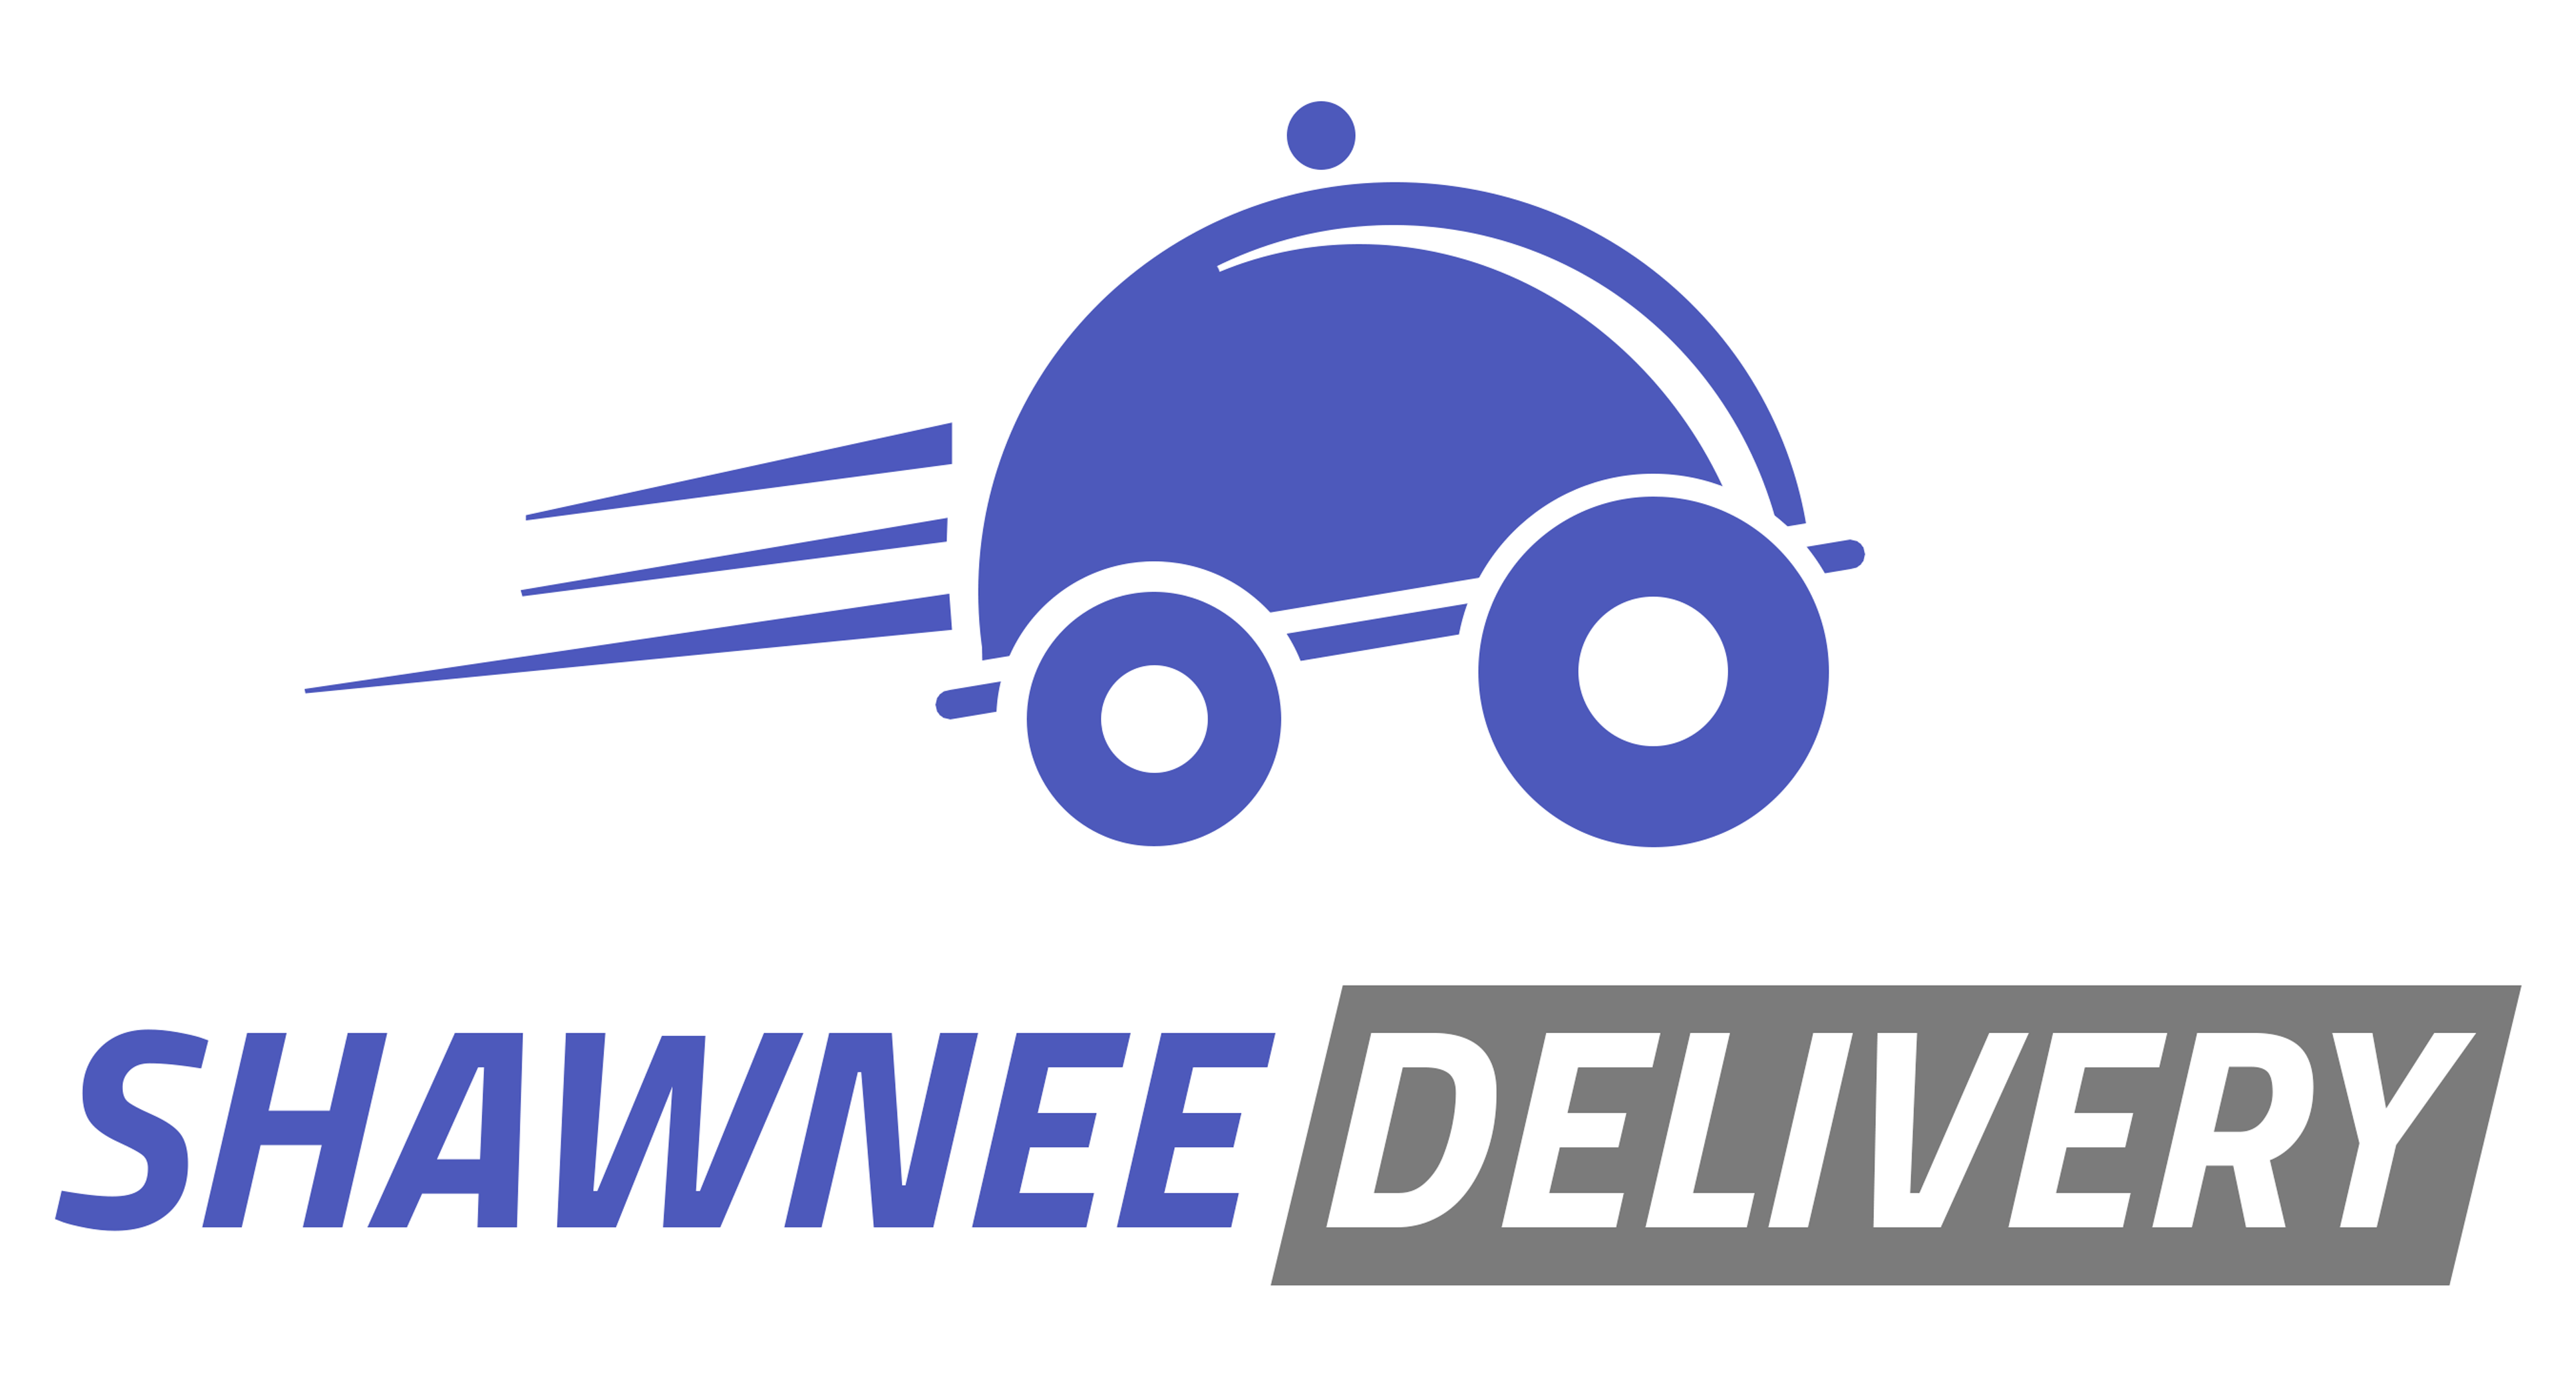 shawnee delivery logo